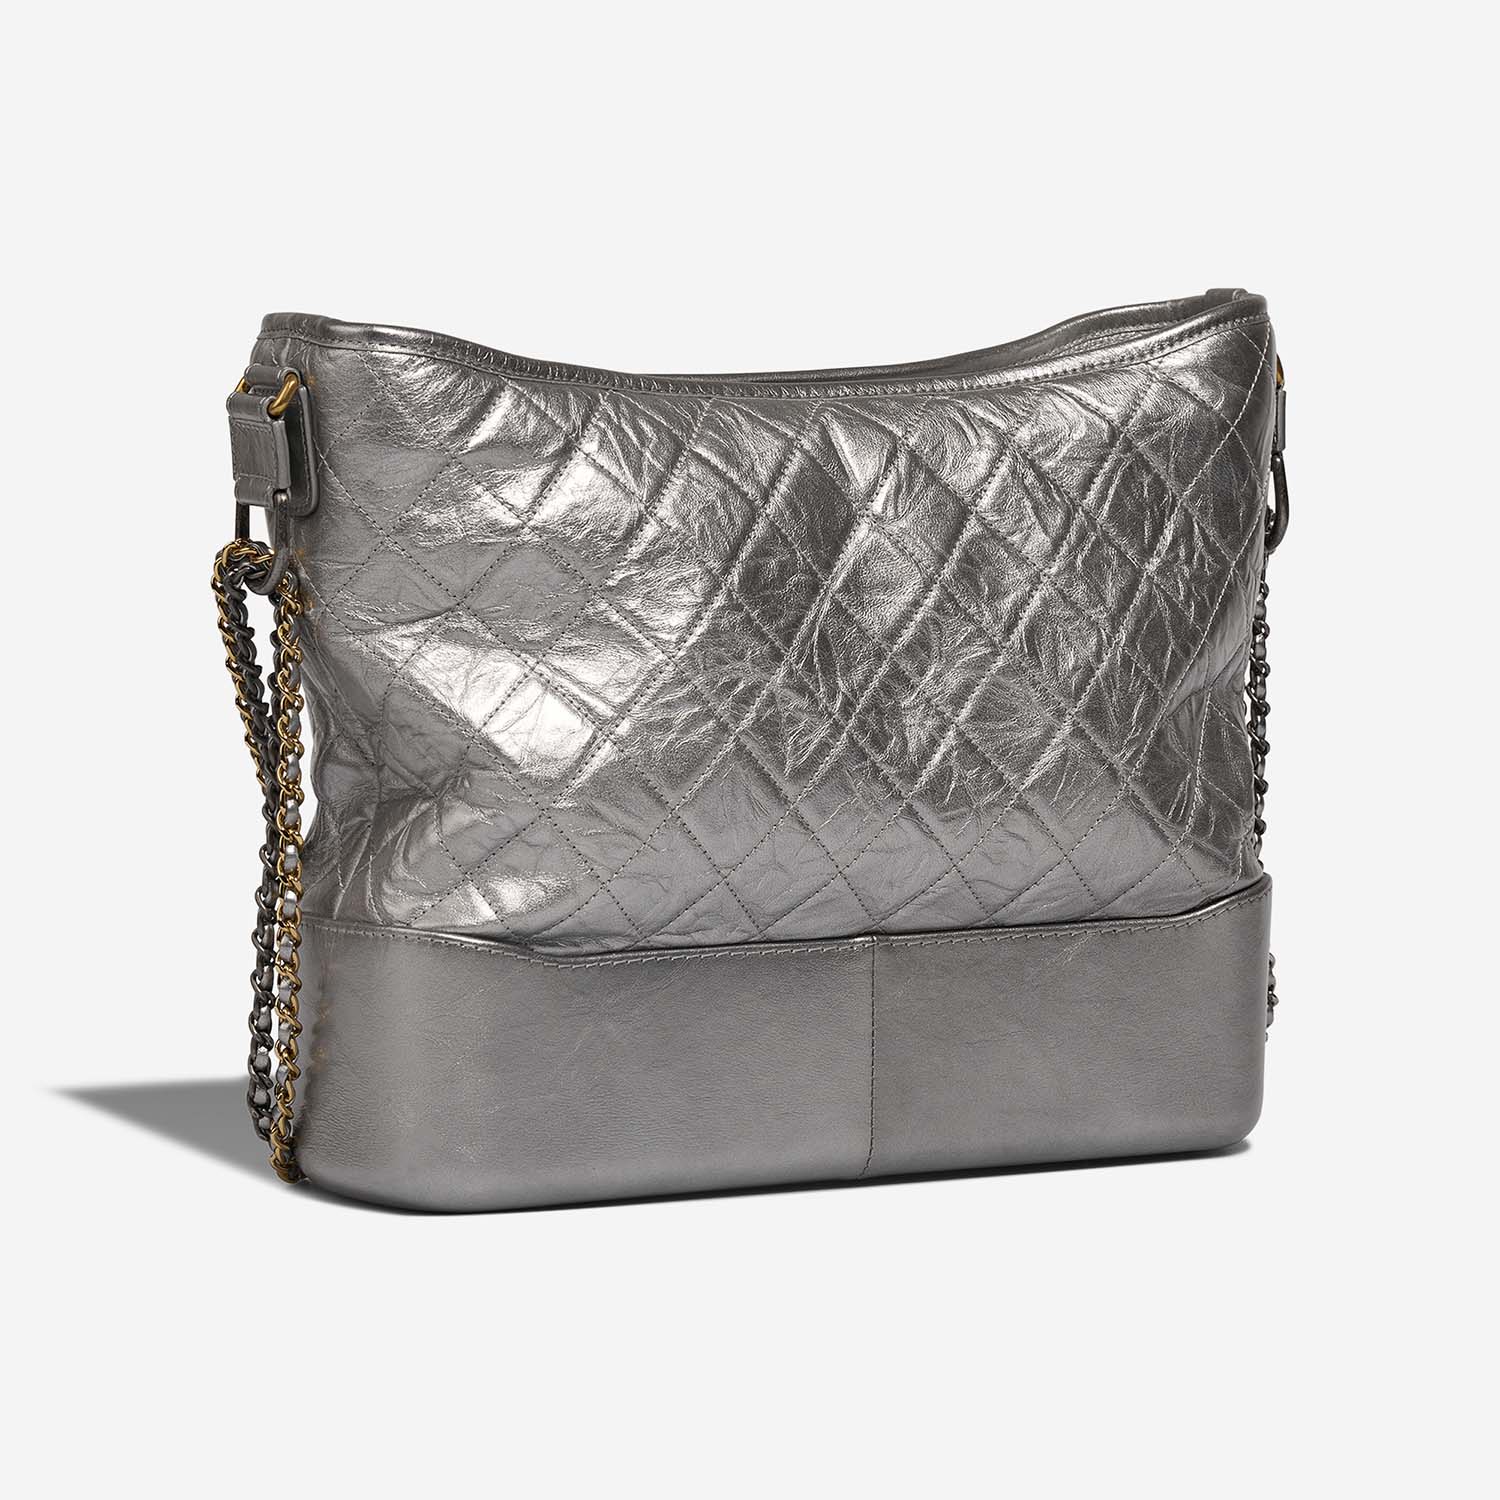 Chanel Gabrielle Large Silver Side Back | Sell your designer bag on Saclab.com